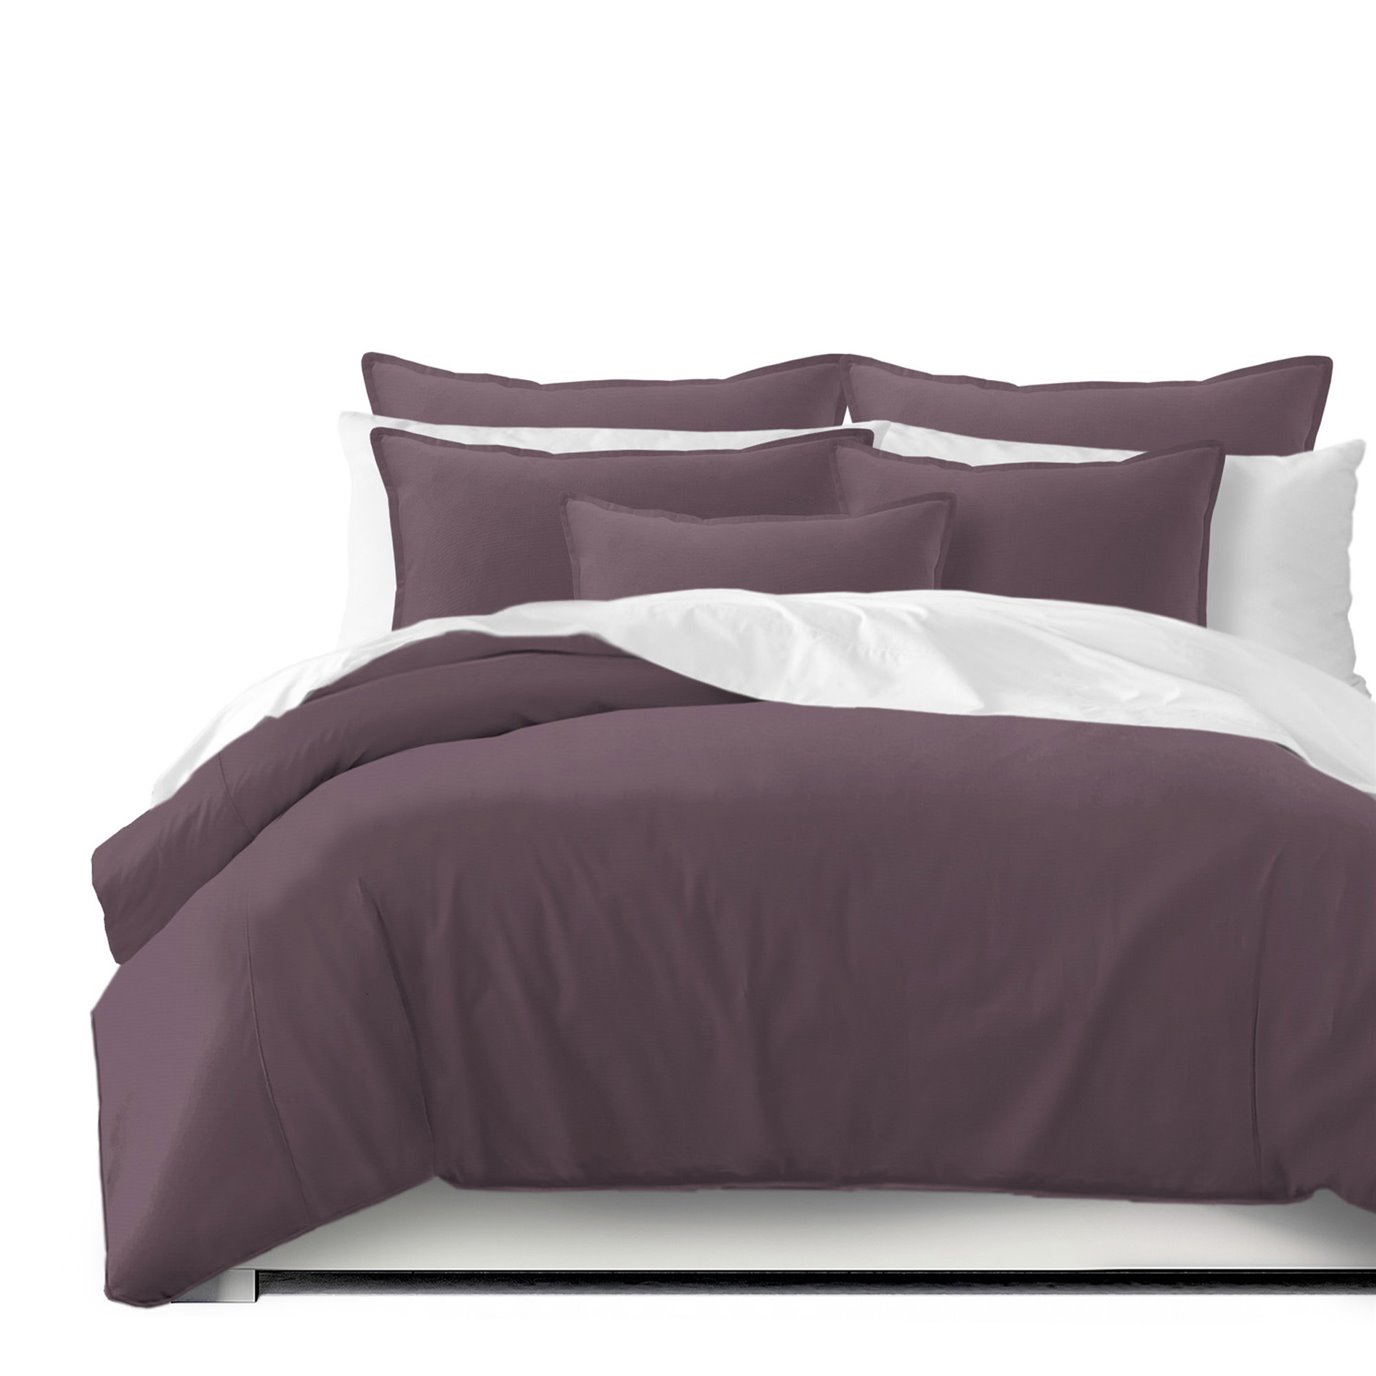 Braxton Purple Grape Duvet Cover and Pillow Sham(s) Set - Size Full